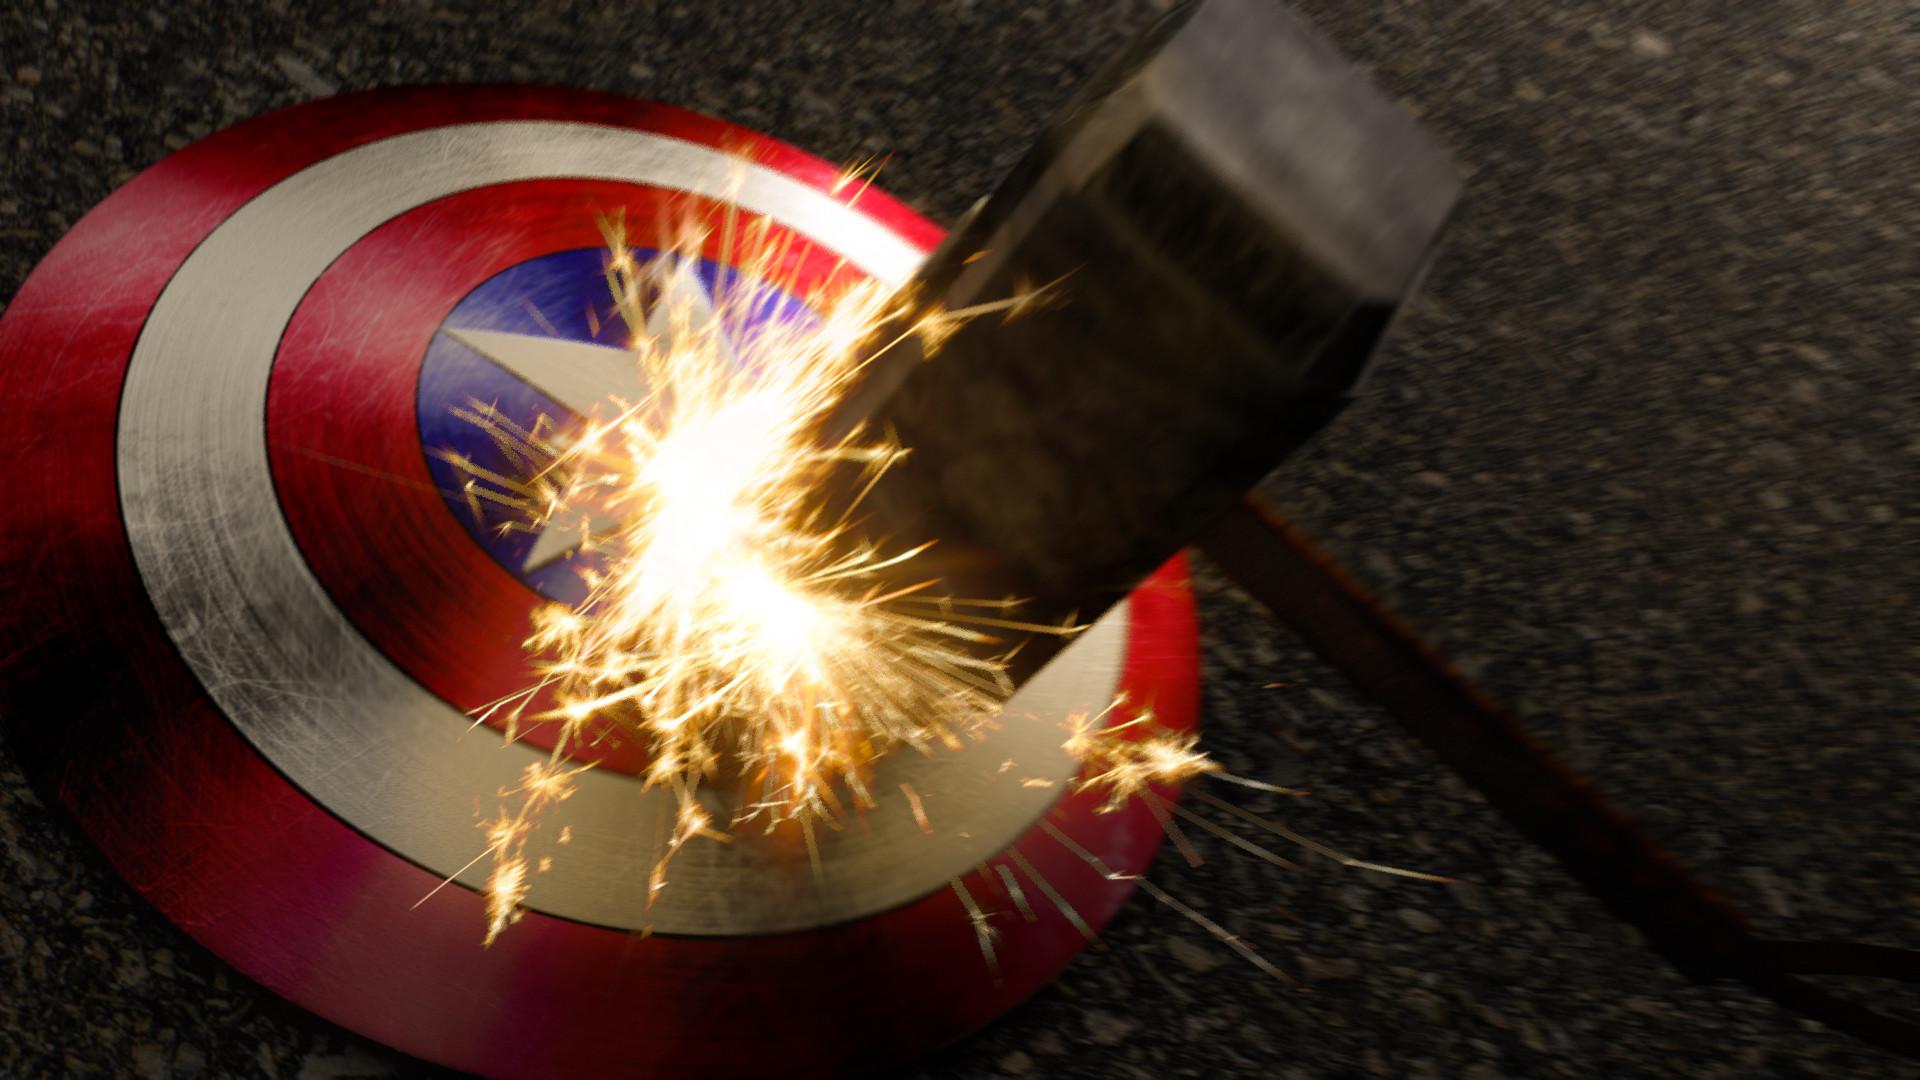 Thor Hammer vs Captain America Shield, Andrew Emad